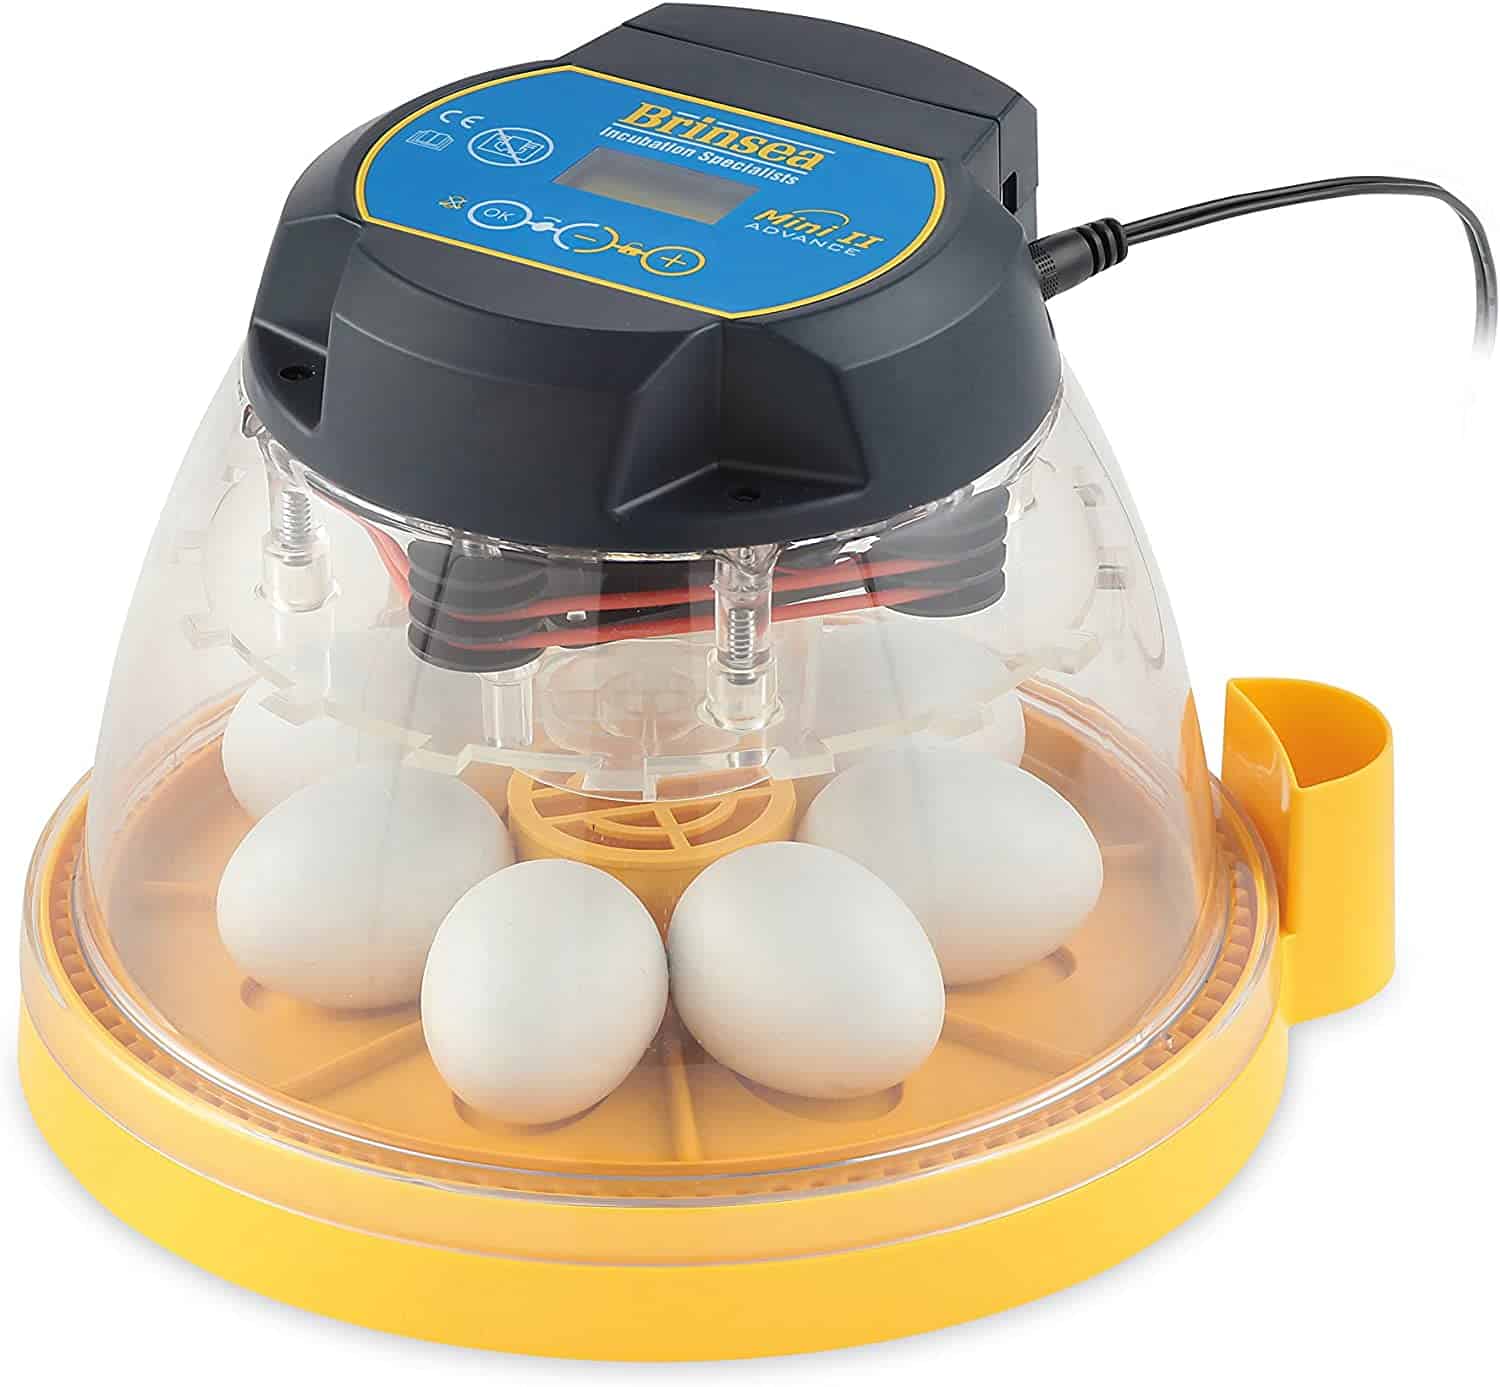 poultry egg incubator